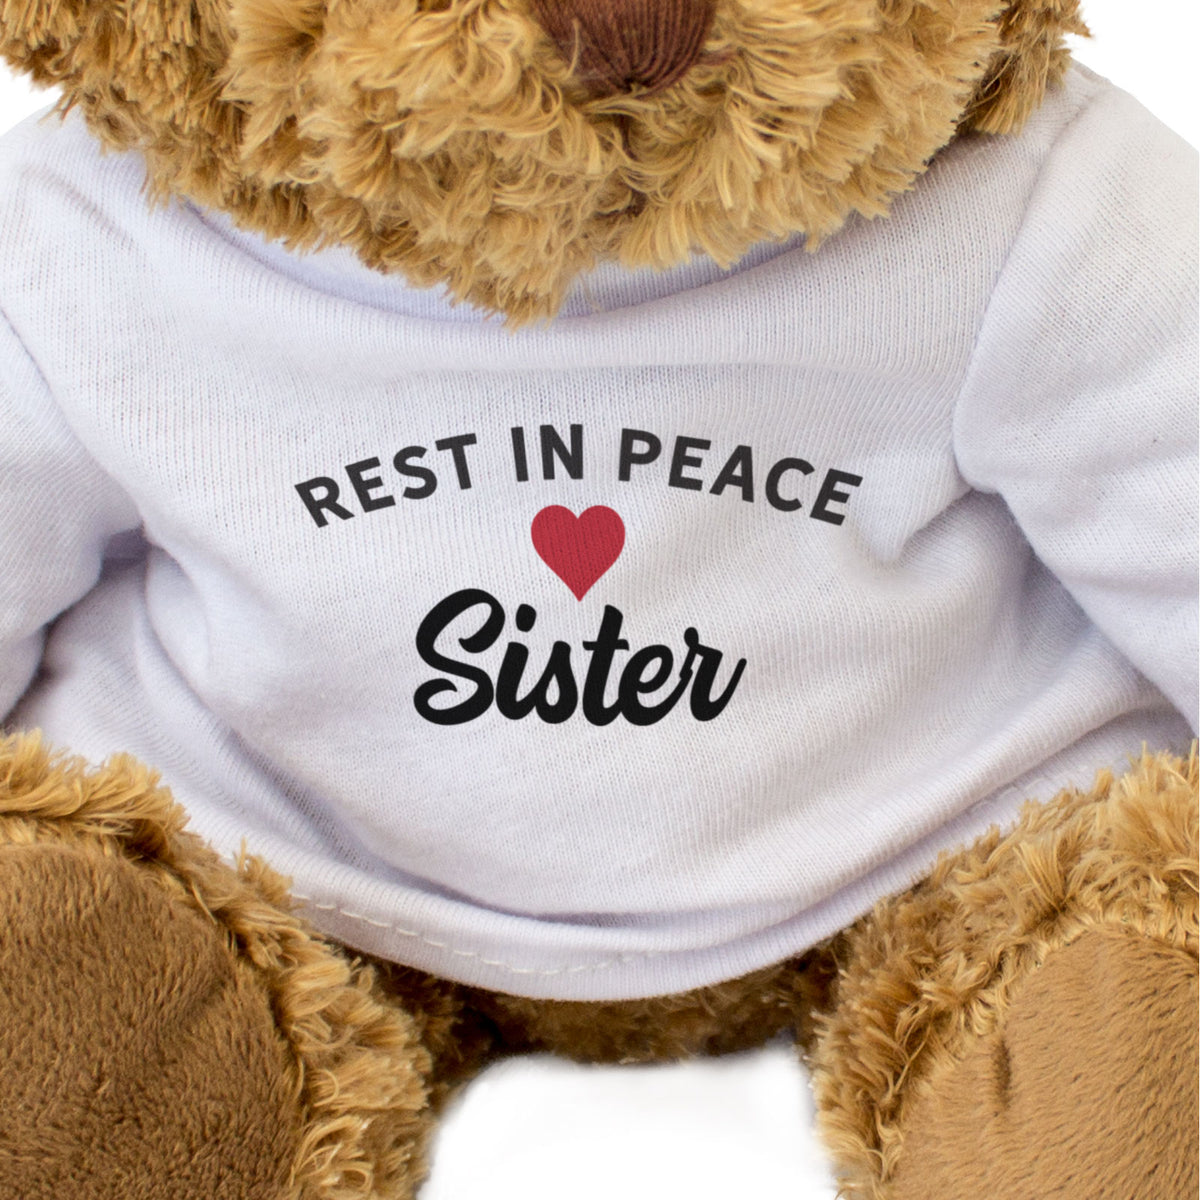 RIP Sister - Teddy Bear - Rest In Peace